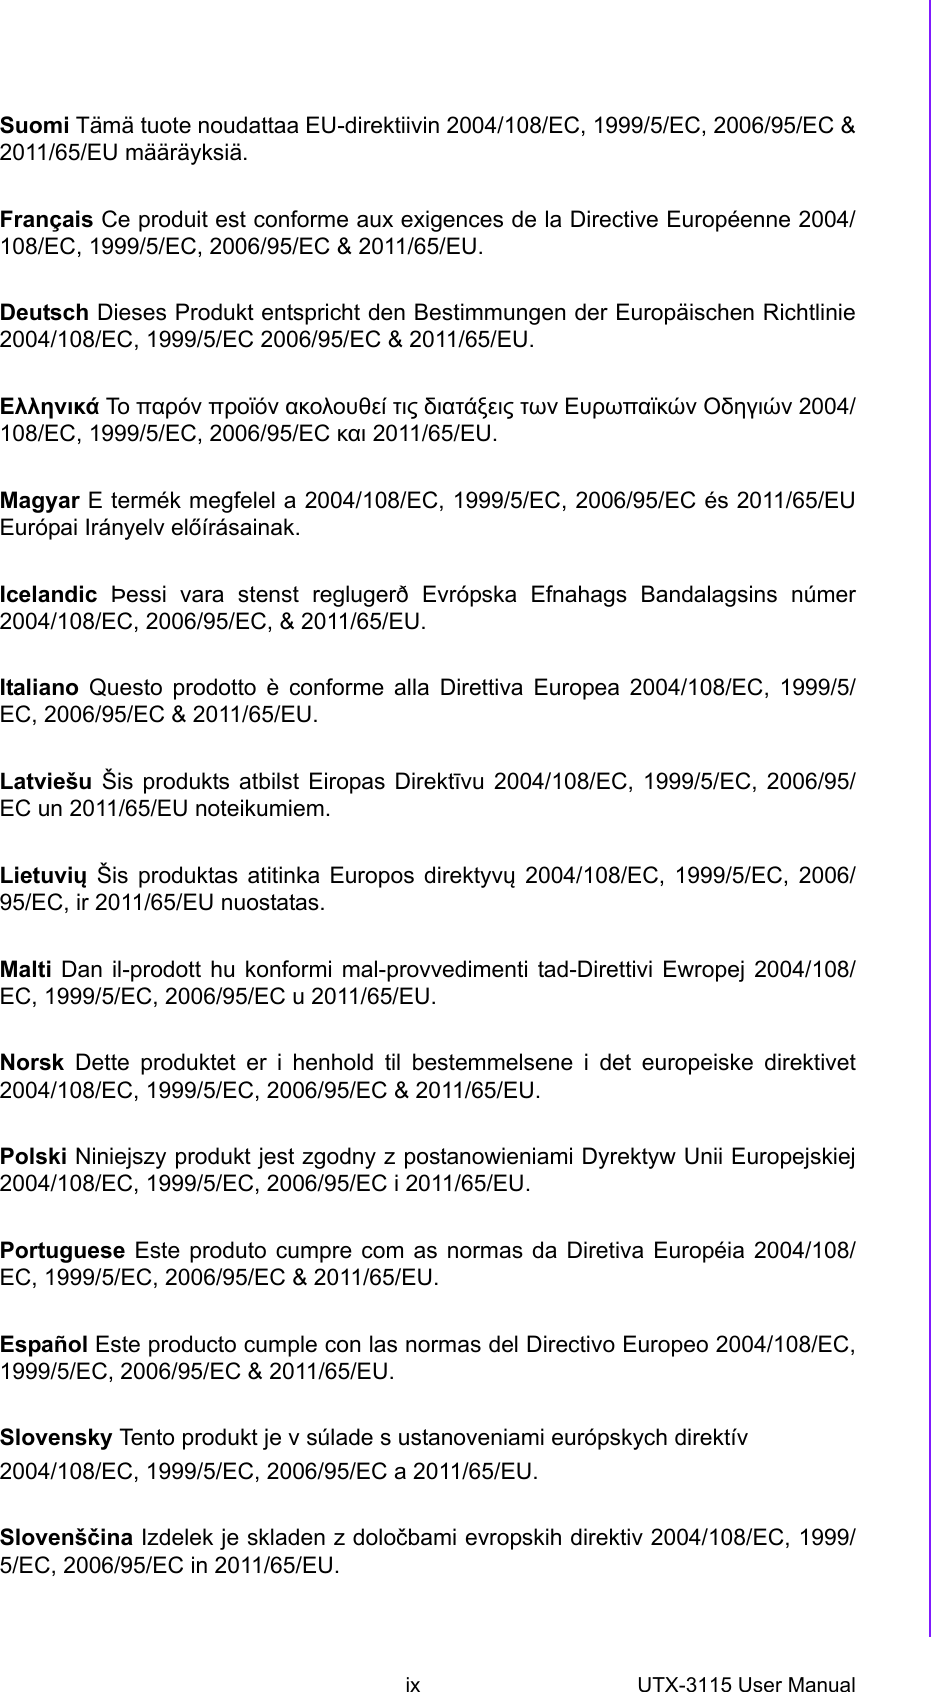 ix UTX-3115 User Manual Suomi Tämä tuote noudattaa EU-direktiivin 2004/108/EC, 1999/5/EC, 2006/95/EC &amp;2011/65/EU määräyksiä.Français Ce produit est conforme aux exigences de la Directive Européenne 2004/108/EC, 1999/5/EC, 2006/95/EC &amp; 2011/65/EU.Deutsch Dieses Produkt entspricht den Bestimmungen der Europäischen Richtlinie2004/108/EC, 1999/5/EC 2006/95/EC &amp; 2011/65/EU.Ελληνικά Το  παρόν προϊόν ακολουθεί τις διατάξεις των Ευρωπαϊκών Οδηγιών 2004/108/EC, 1999/5/EC, 2006/95/EC και 2011/65/EU.Magyar E termék megfelel a 2004/108/EC, 1999/5/EC, 2006/95/EC és 2011/65/EUEurópai Irányelv előírásainak.Icelandic Þessi vara stenst reglugerð Evrópska Efnahags Bandalagsins númer2004/108/EC, 2006/95/EC, &amp; 2011/65/EU.Italiano Questo prodotto è conforme alla Direttiva Europea 2004/108/EC, 1999/5/EC, 2006/95/EC &amp; 2011/65/EU.Latviešu Šis produkts atbilst Eiropas Direktīvu 2004/108/EC, 1999/5/EC, 2006/95/EC un 2011/65/EU noteikumiem.Lietuvių Šis produktas atitinka Europos direktyvų 2004/108/EC, 1999/5/EC, 2006/95/EC, ir 2011/65/EU nuostatas.Malti Dan il-prodott hu konformi mal-provvedimenti tad-Direttivi Ewropej 2004/108/EC, 1999/5/EC, 2006/95/EC u 2011/65/EU.Norsk Dette produktet er i henhold til bestemmelsene i det europeiske direktivet2004/108/EC, 1999/5/EC, 2006/95/EC &amp; 2011/65/EU.Polski Niniejszy produkt jest zgodny z postanowieniami Dyrektyw Unii Europejskiej2004/108/EC, 1999/5/EC, 2006/95/EC i 2011/65/EU.Portuguese Este produto cumpre com as normas da Diretiva Européia 2004/108/EC, 1999/5/EC, 2006/95/EC &amp; 2011/65/EU.Español Este producto cumple con las normas del Directivo Europeo 2004/108/EC,1999/5/EC, 2006/95/EC &amp; 2011/65/EU.Slovensky Tento produkt je v súlade s ustanoveniami európskych direktív2004/108/EC, 1999/5/EC, 2006/95/EC a 2011/65/EU.Slovenščina Izdelek je skladen z določbami evropskih direktiv 2004/108/EC, 1999/5/EC, 2006/95/EC in 2011/65/EU.